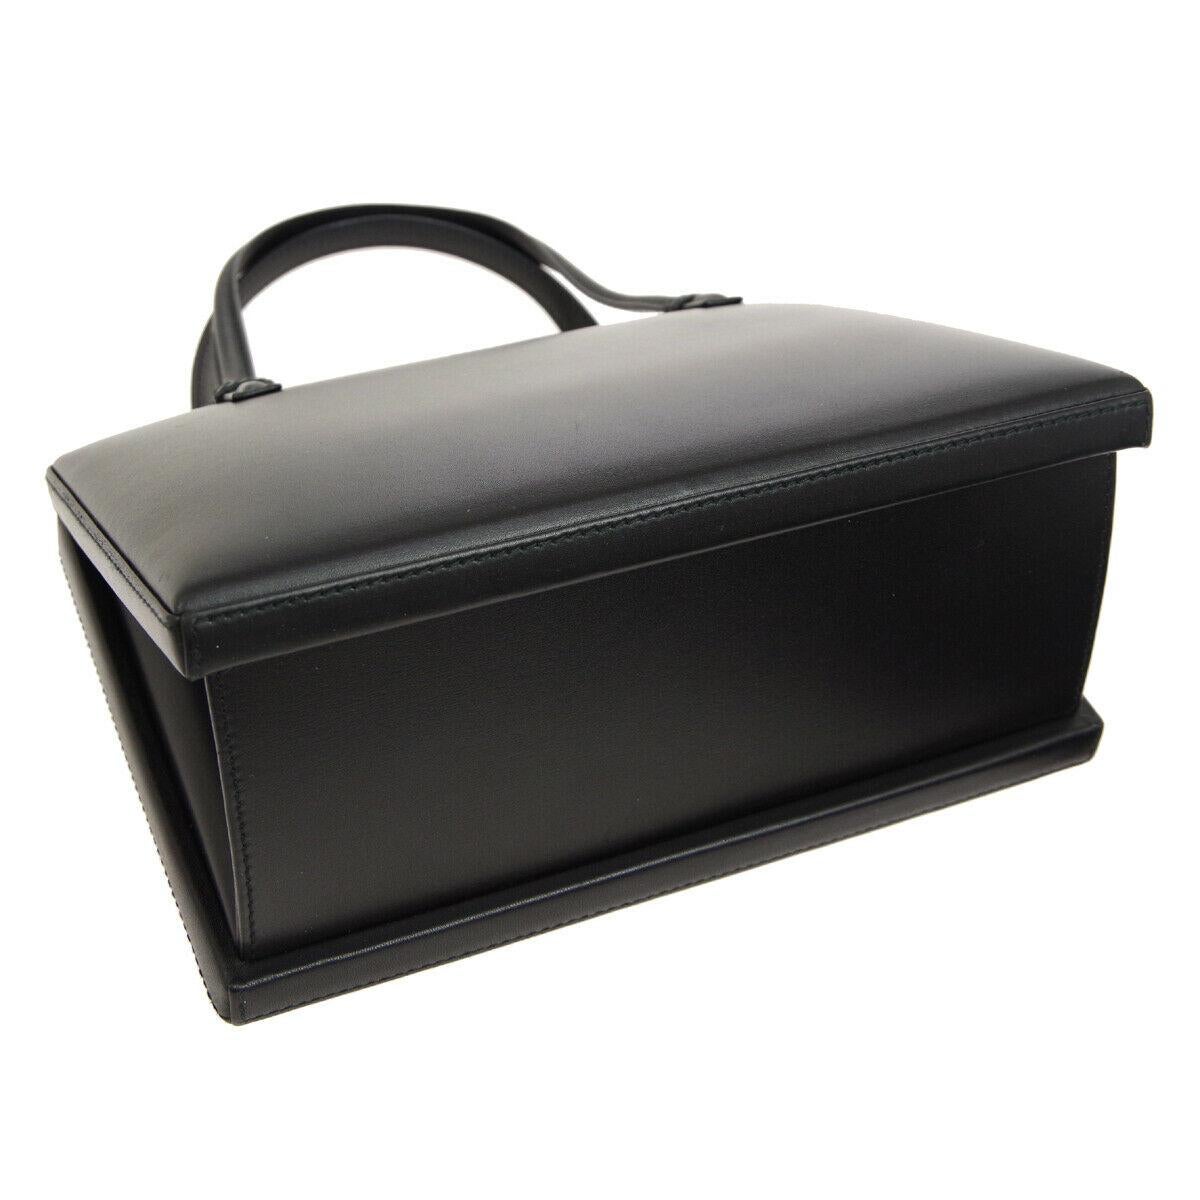 Women's Loewe Black Leather Small Top Handle Satchel Tote Shopper Bag